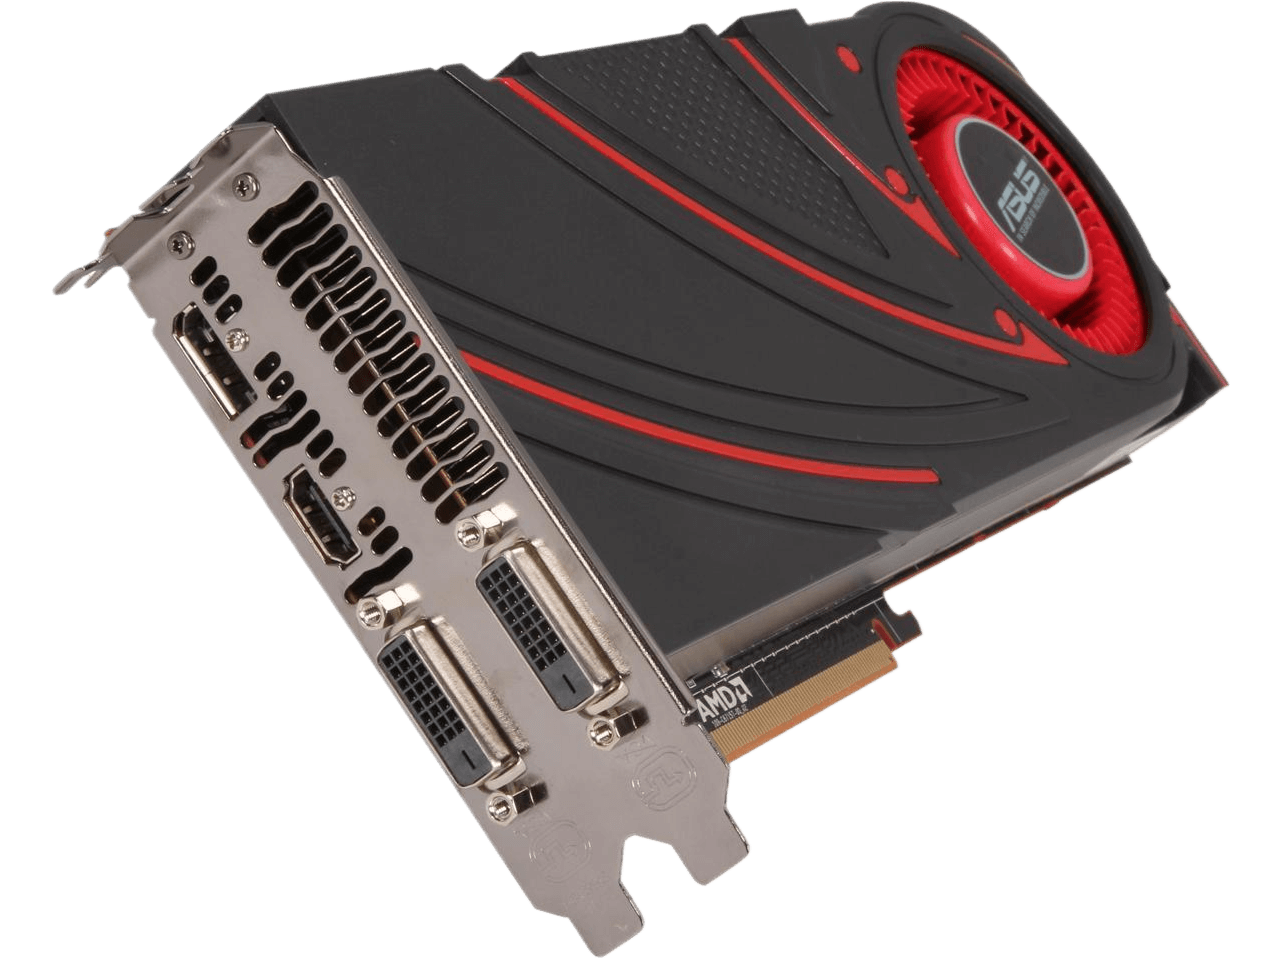 ASUS Radeon R9 290X 4GB GDDR5 PCI Express 3.0 CrossFireX Support Video Card R9290X-G-4GD5